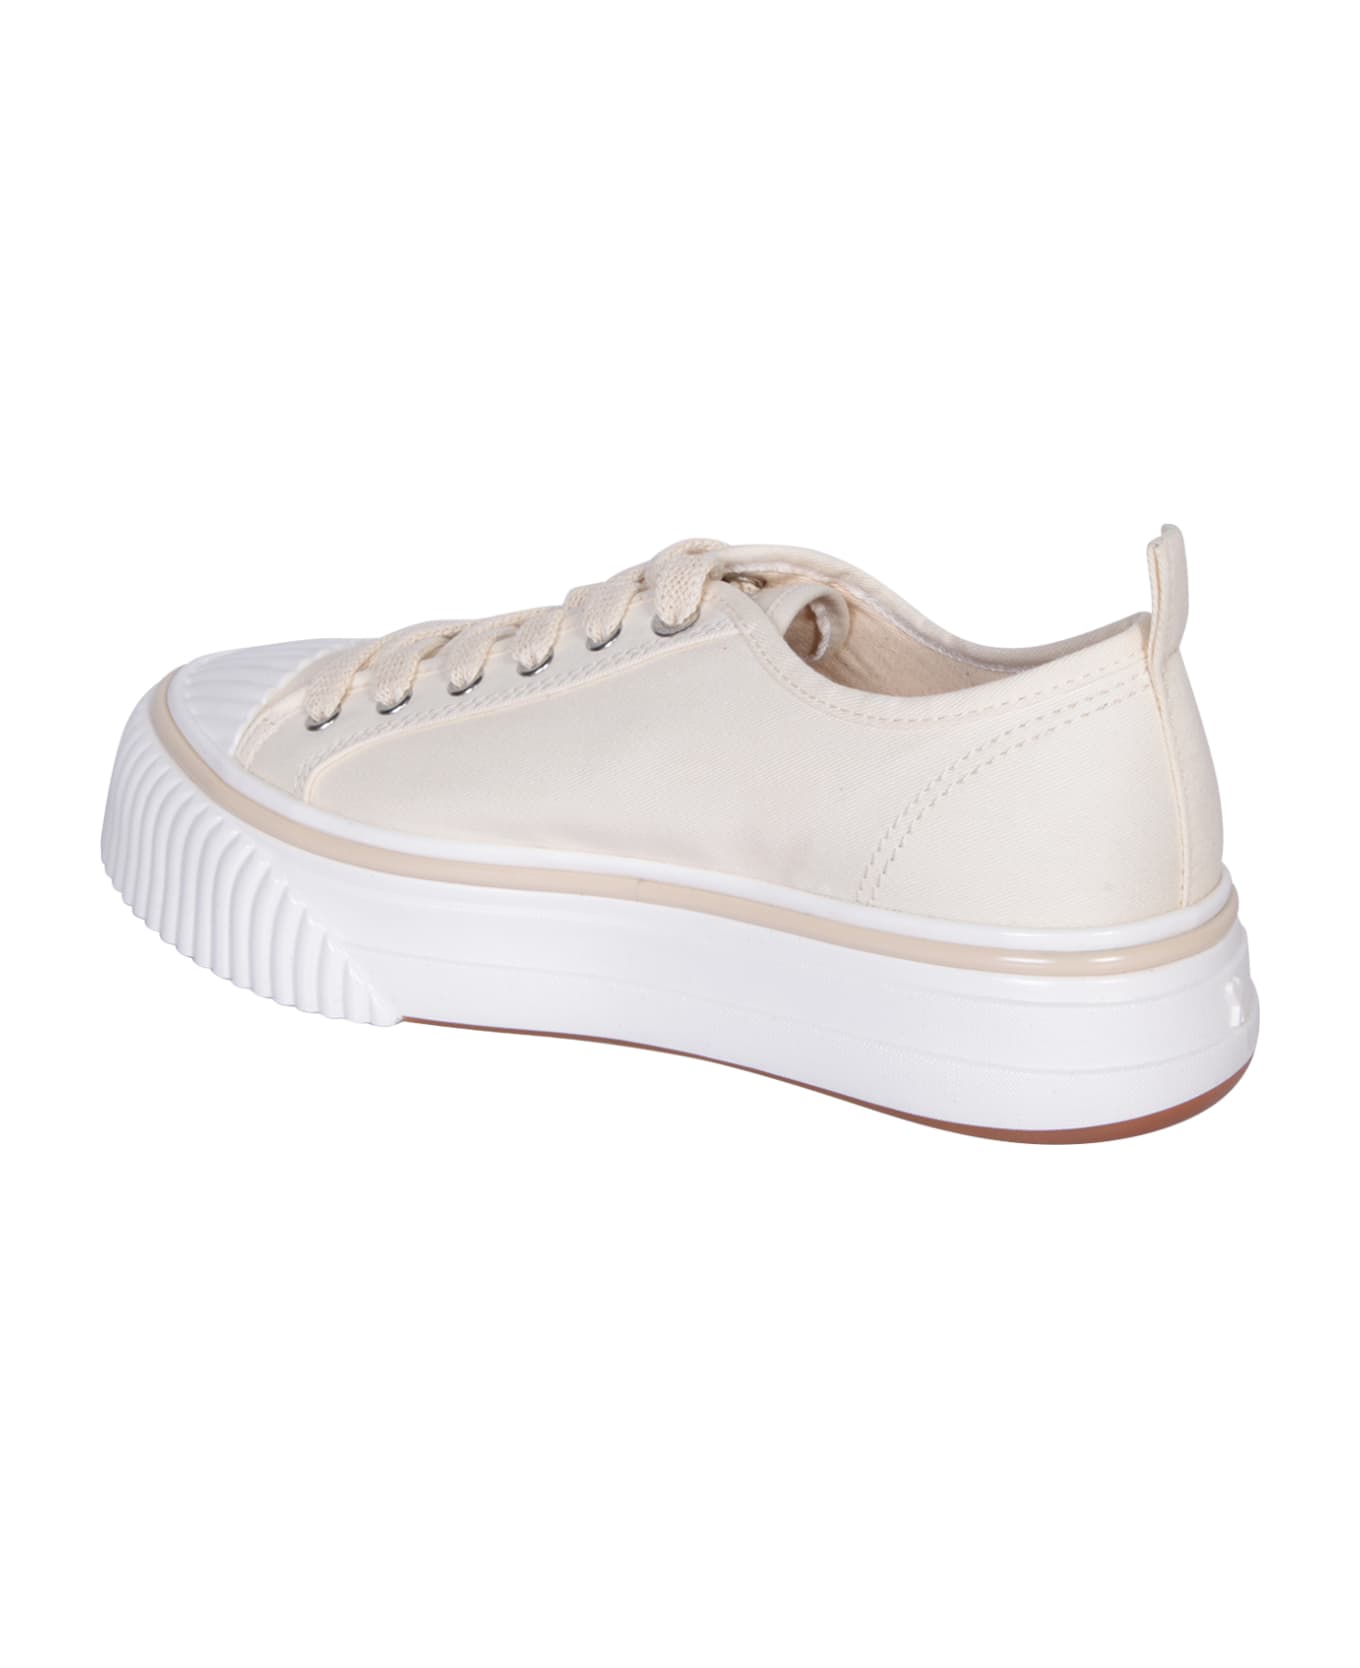 Ami Alexandre Mattiussi 1980 Low Top Sneakers White - White